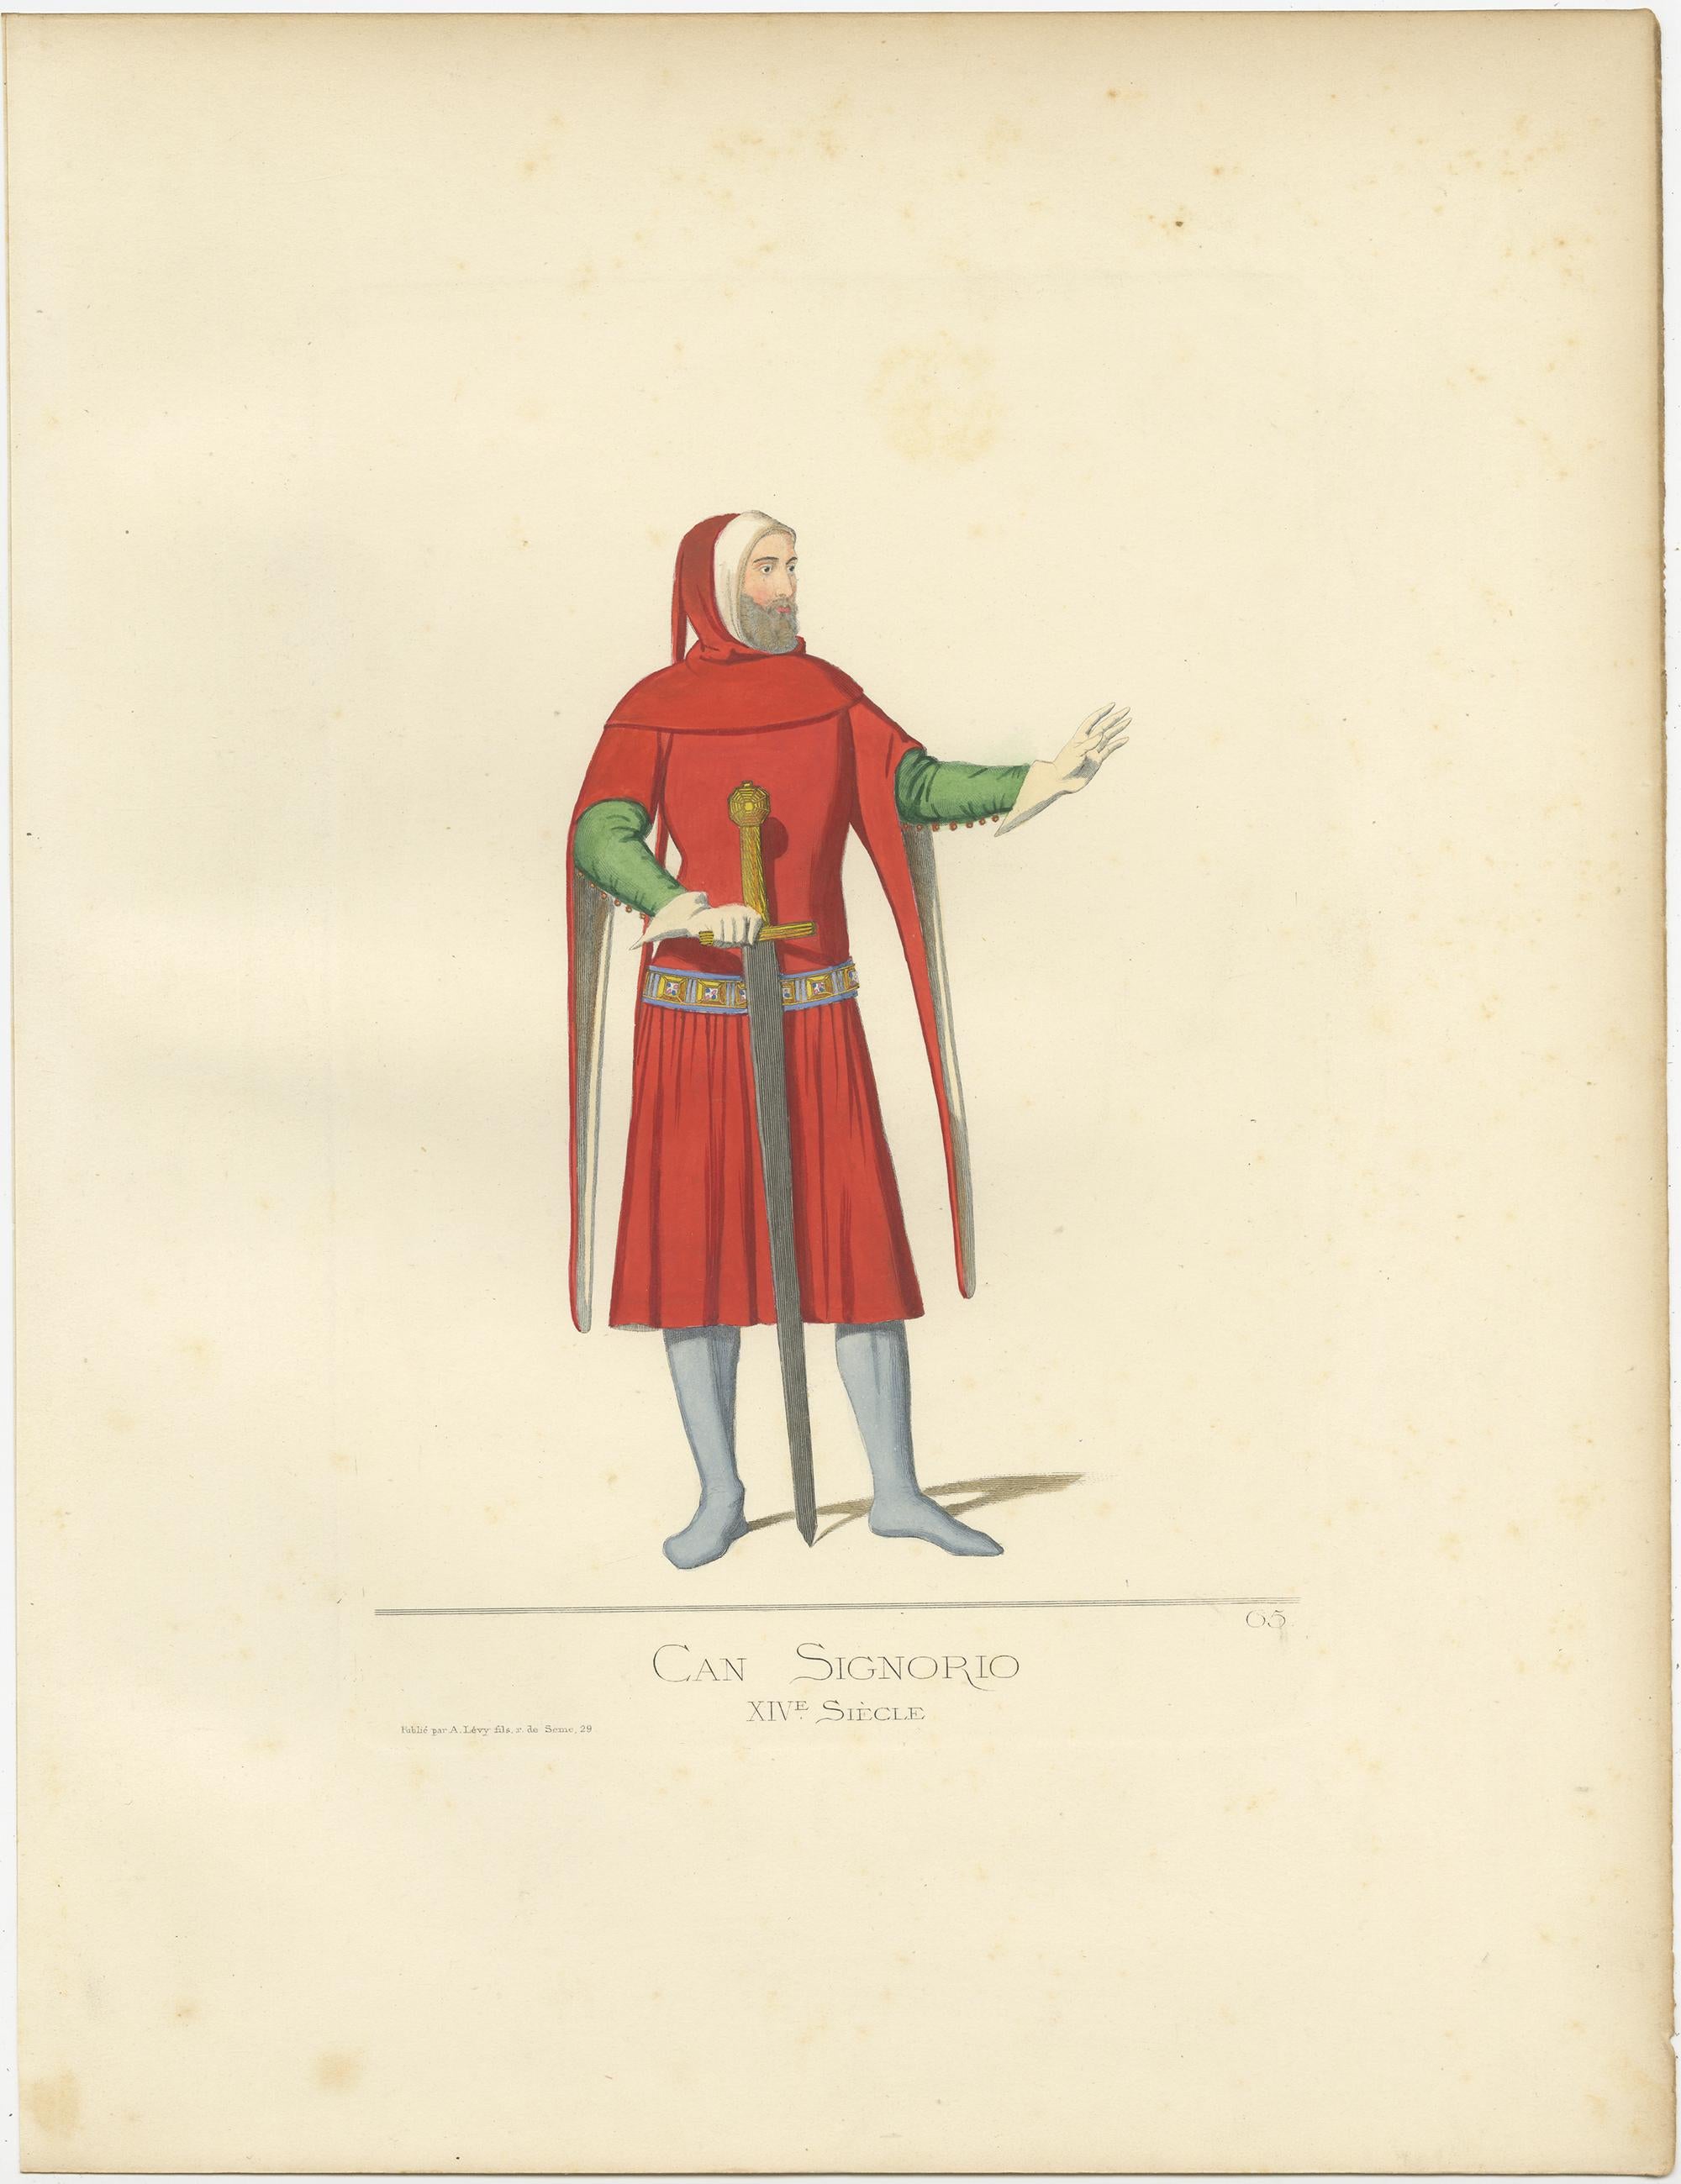 19th Century Antique Print of Cansignorio Della Scala, Lord of Verona, Italy by Bonnard, 1860